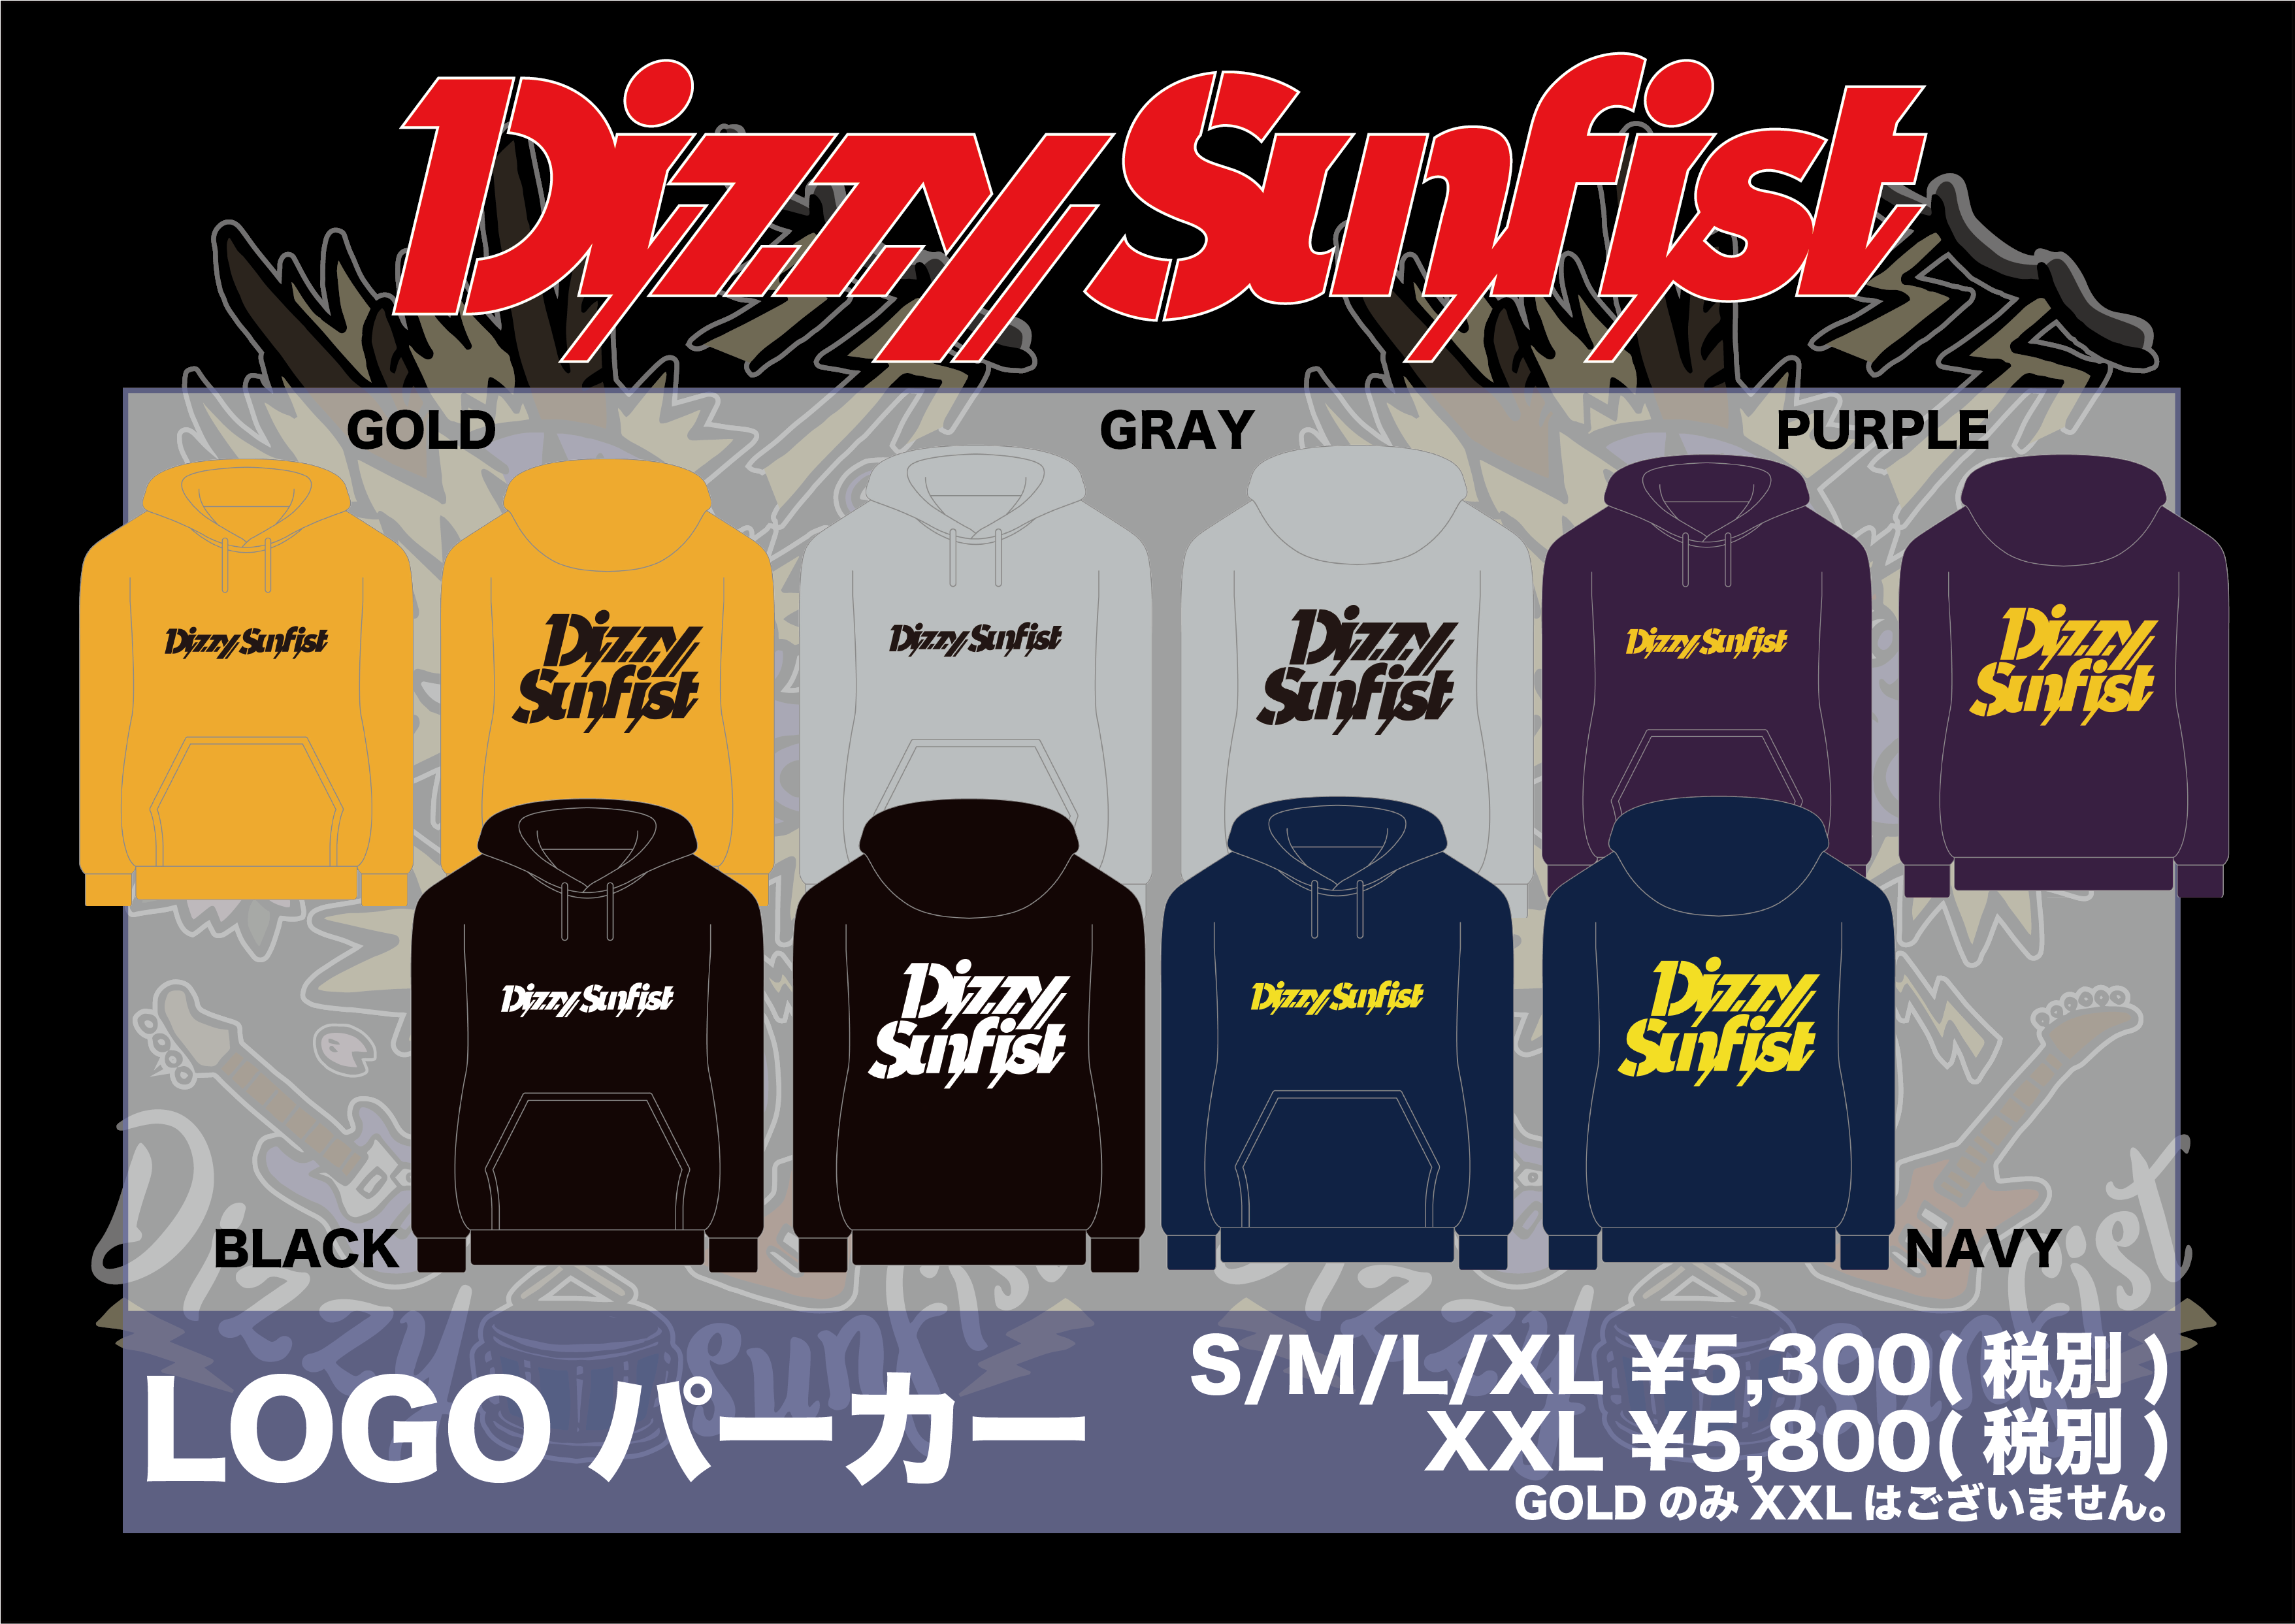 Dizzy Sunfist 2018 Hoodie＆Coach Jkt 受注販売開始！！ | Dizzy 